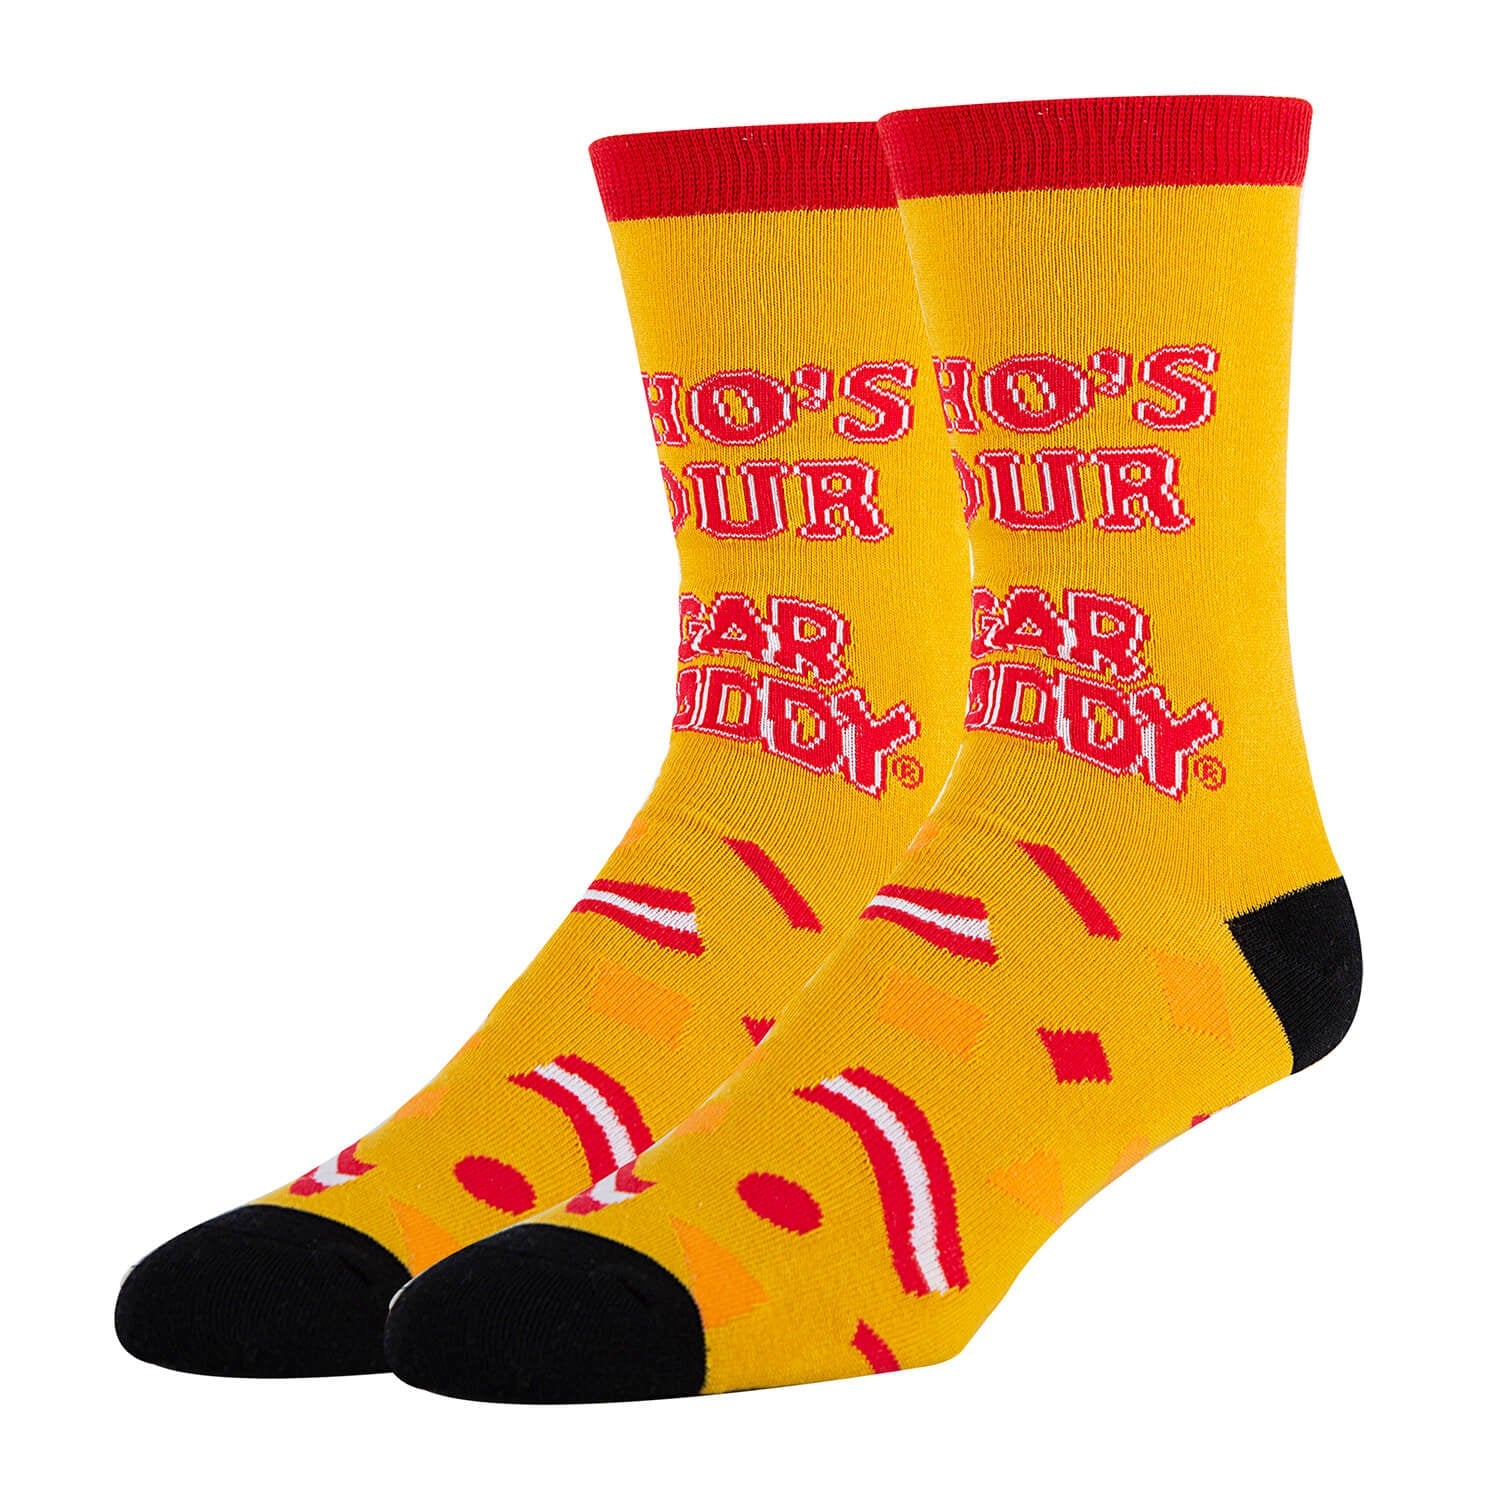 ODD SOX - Mountain Dew Code Red Socks – Sugar Daddy's